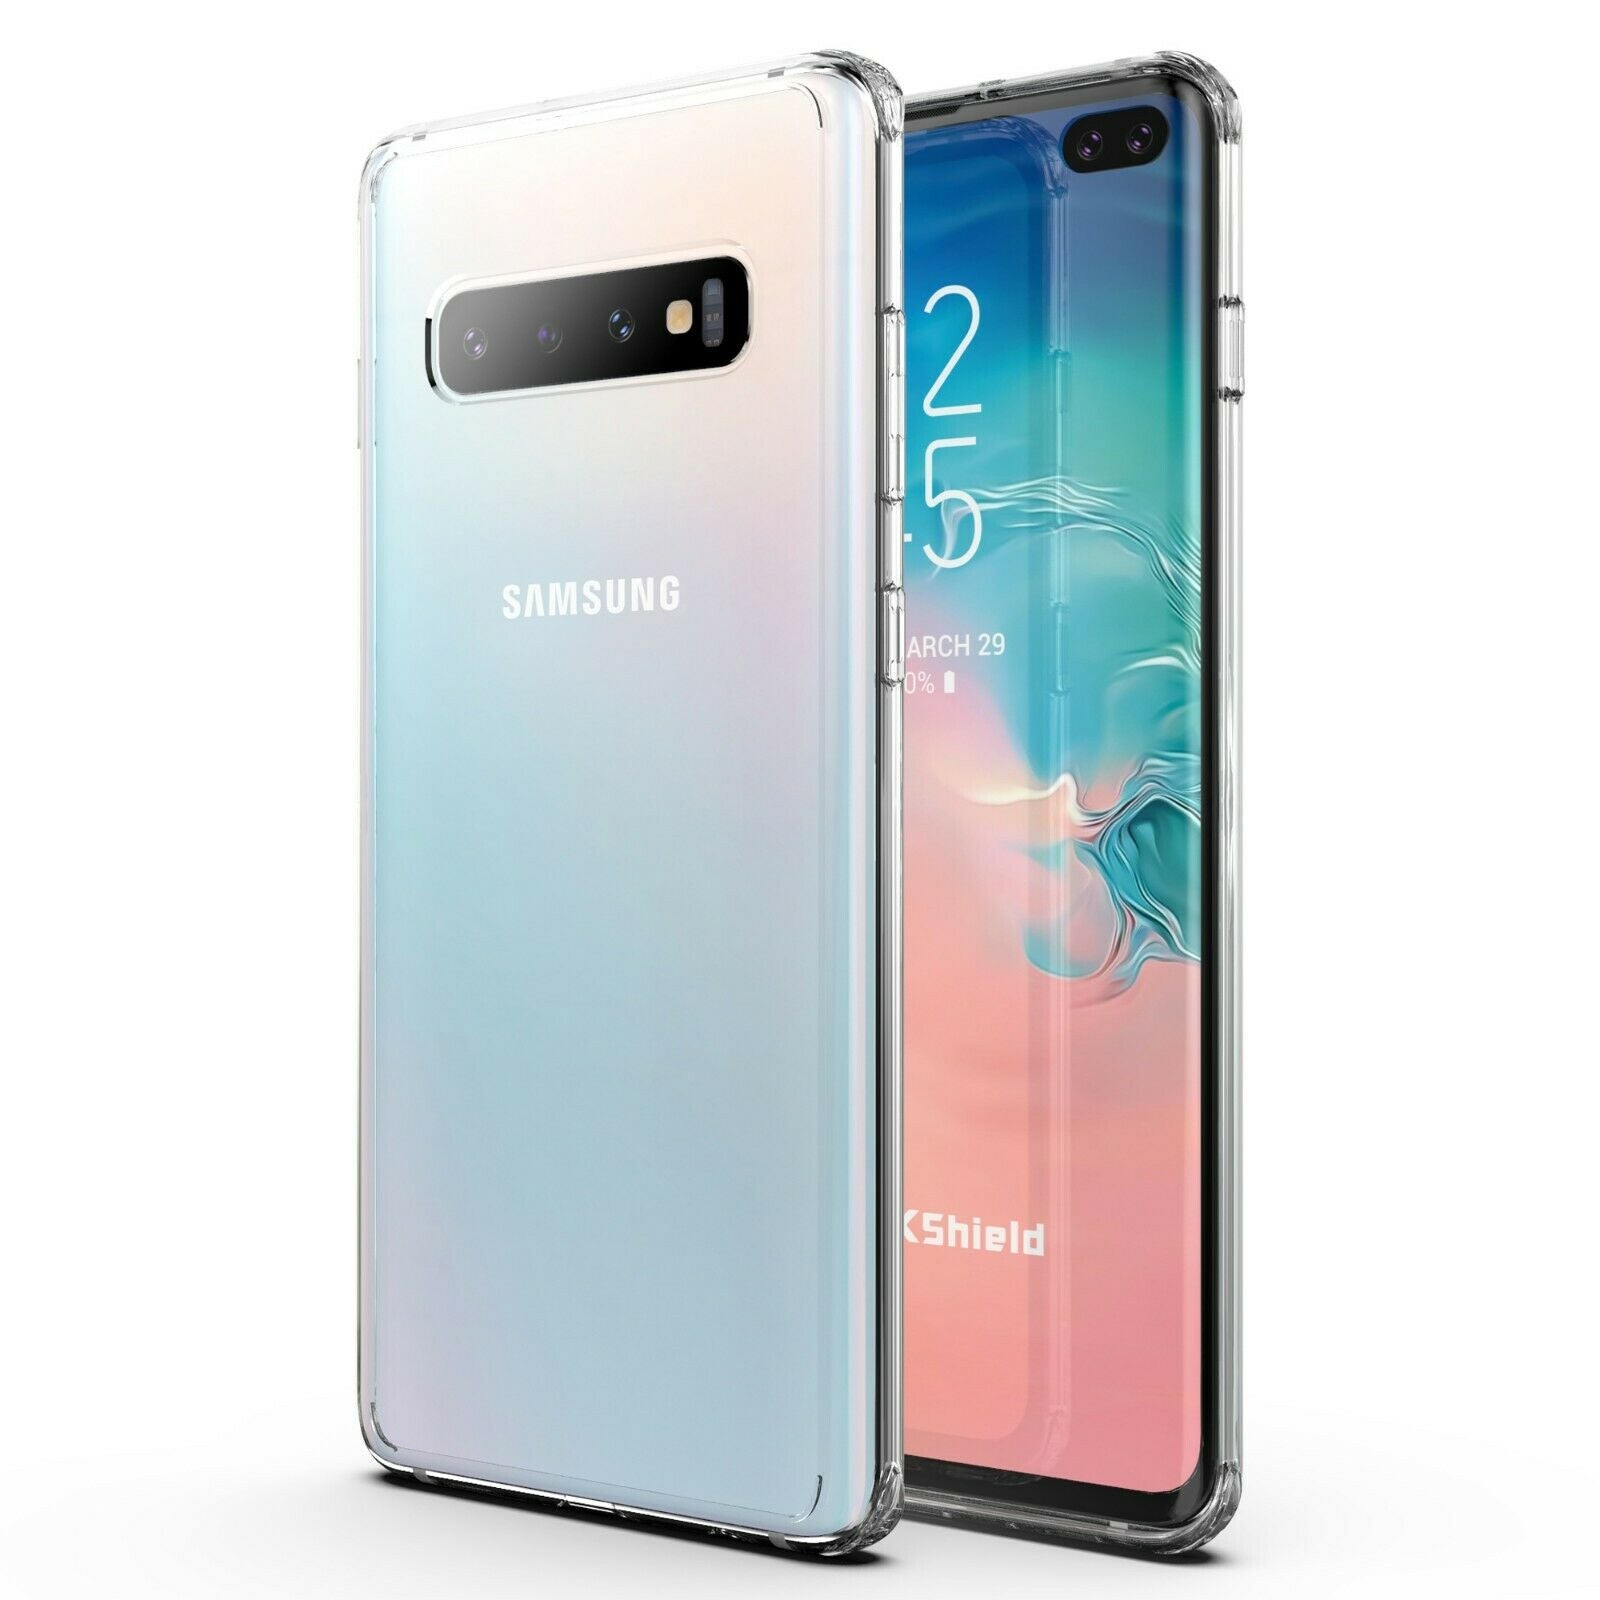 Samsung Galaxy S10 Case Shockproof Crystal Bumper Case Cover